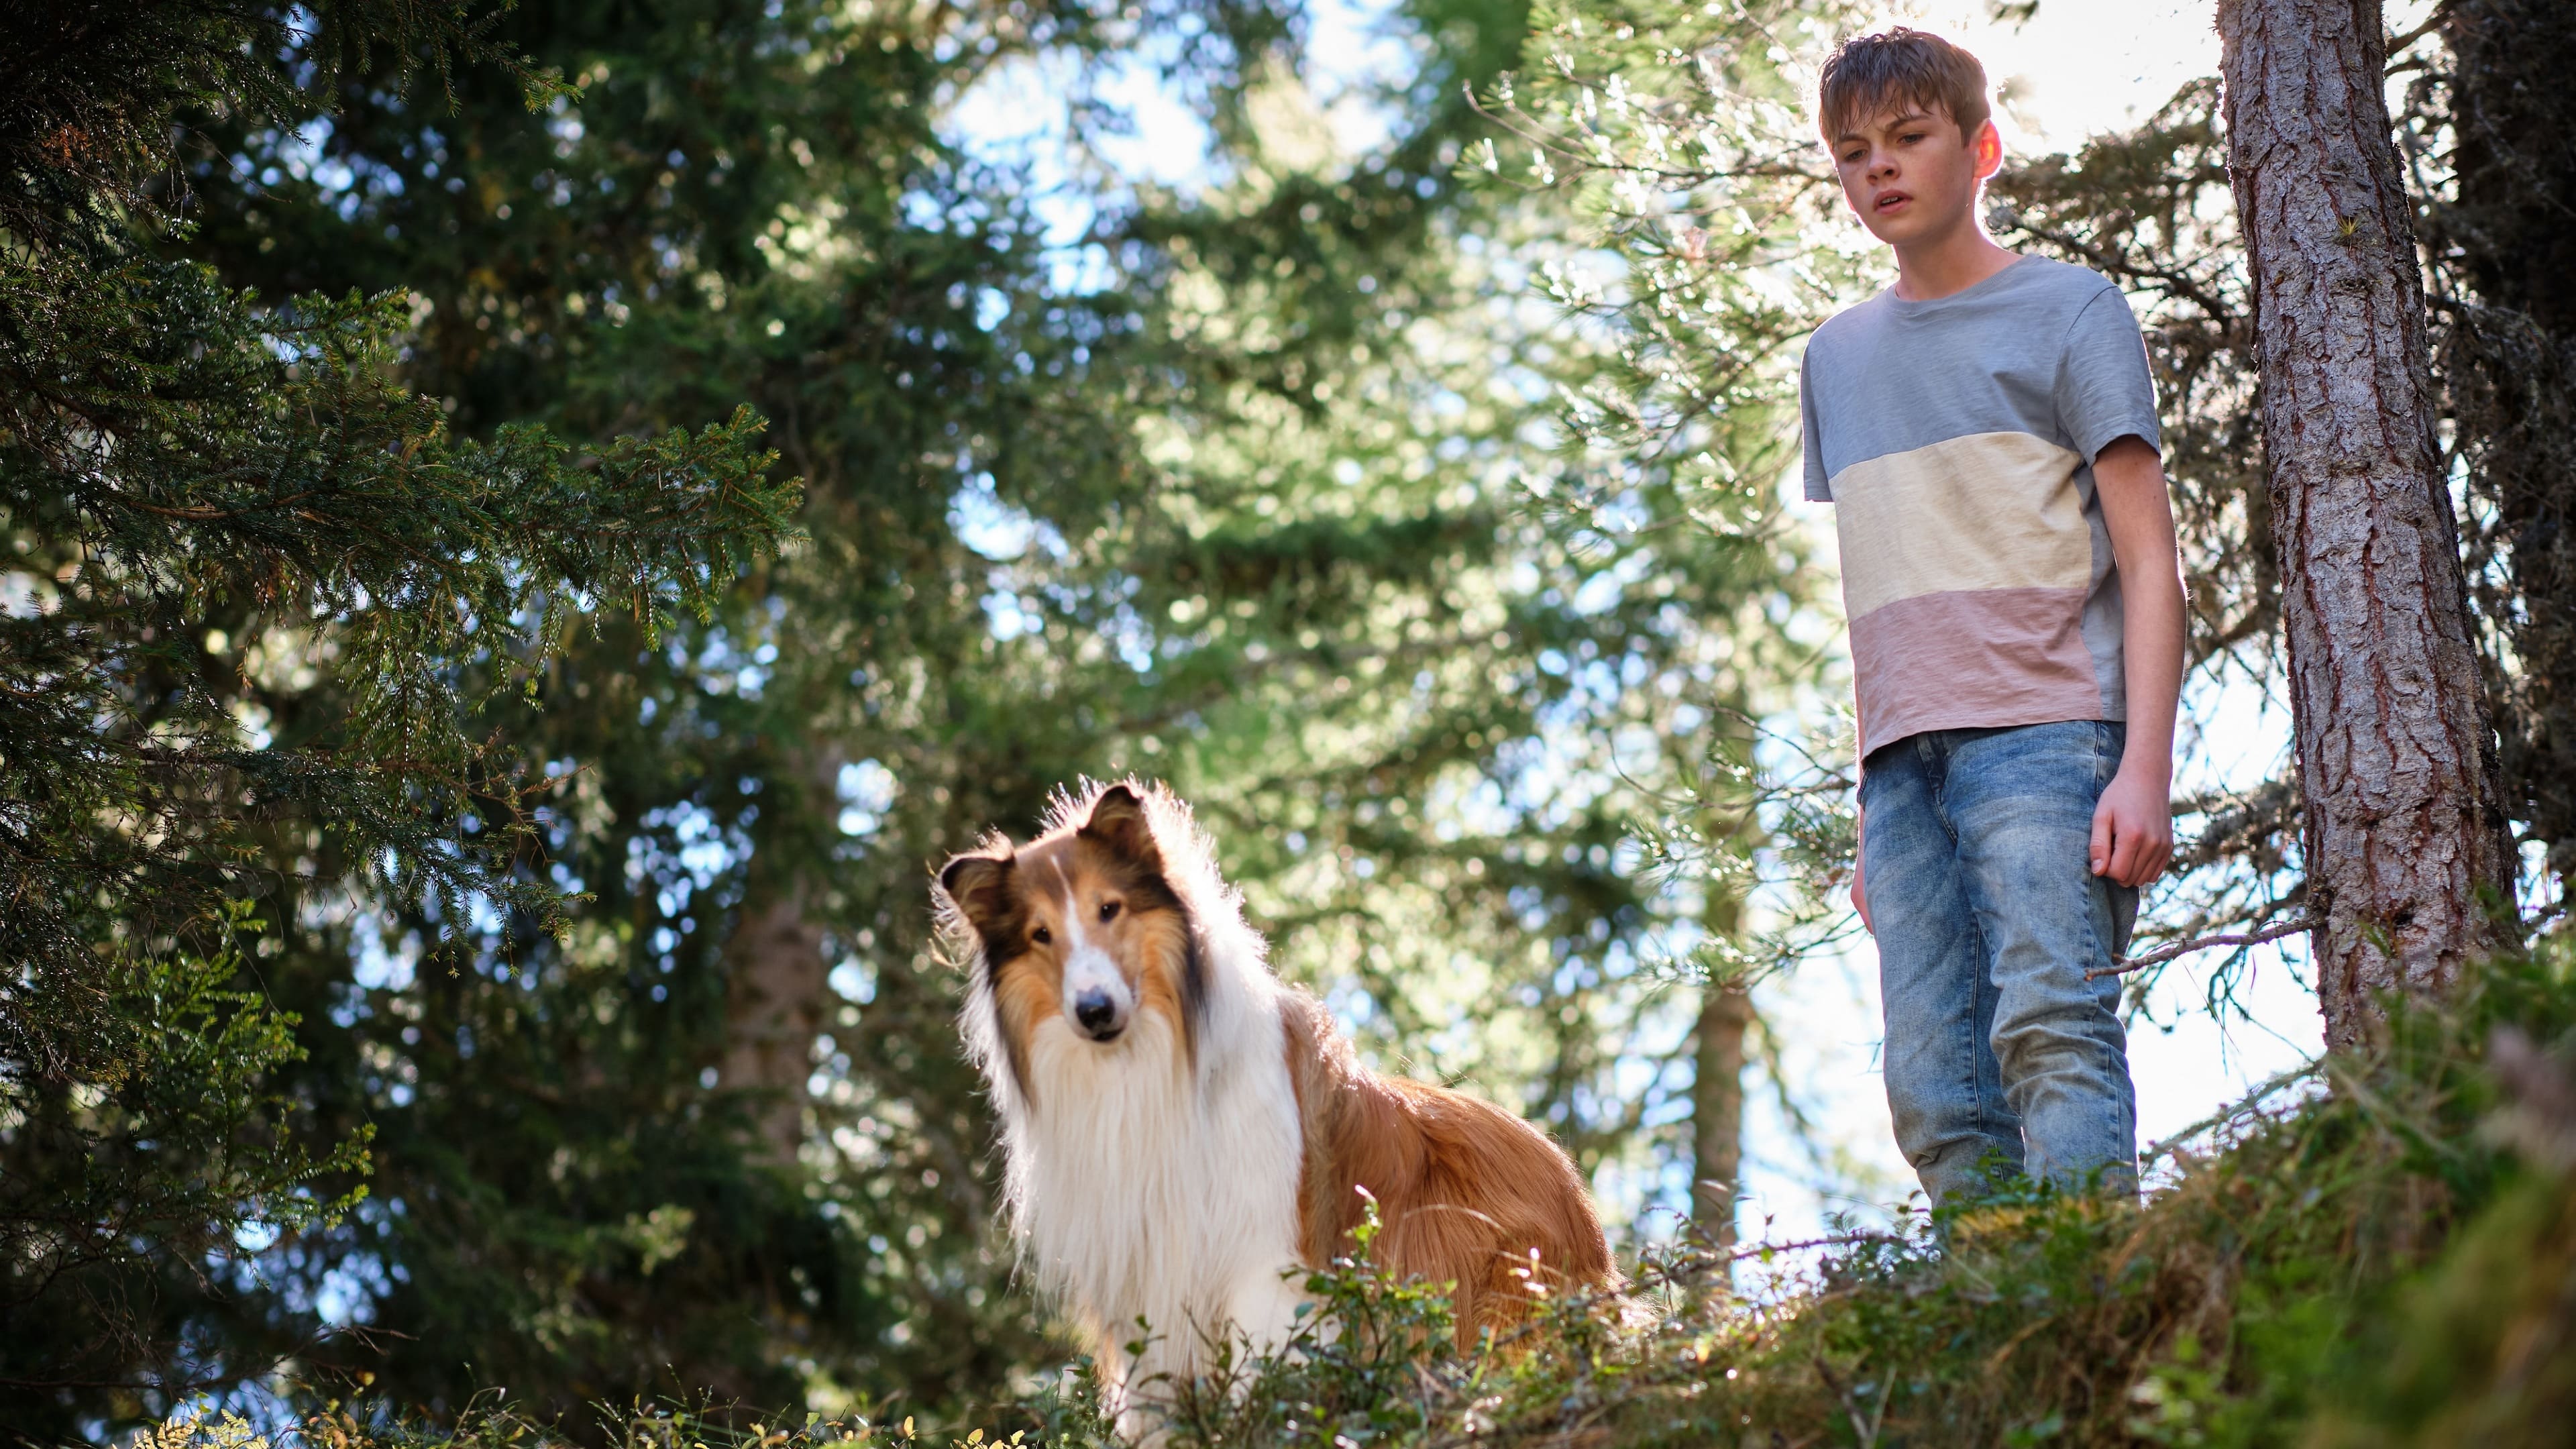 Lassie: Nové dobrodružství